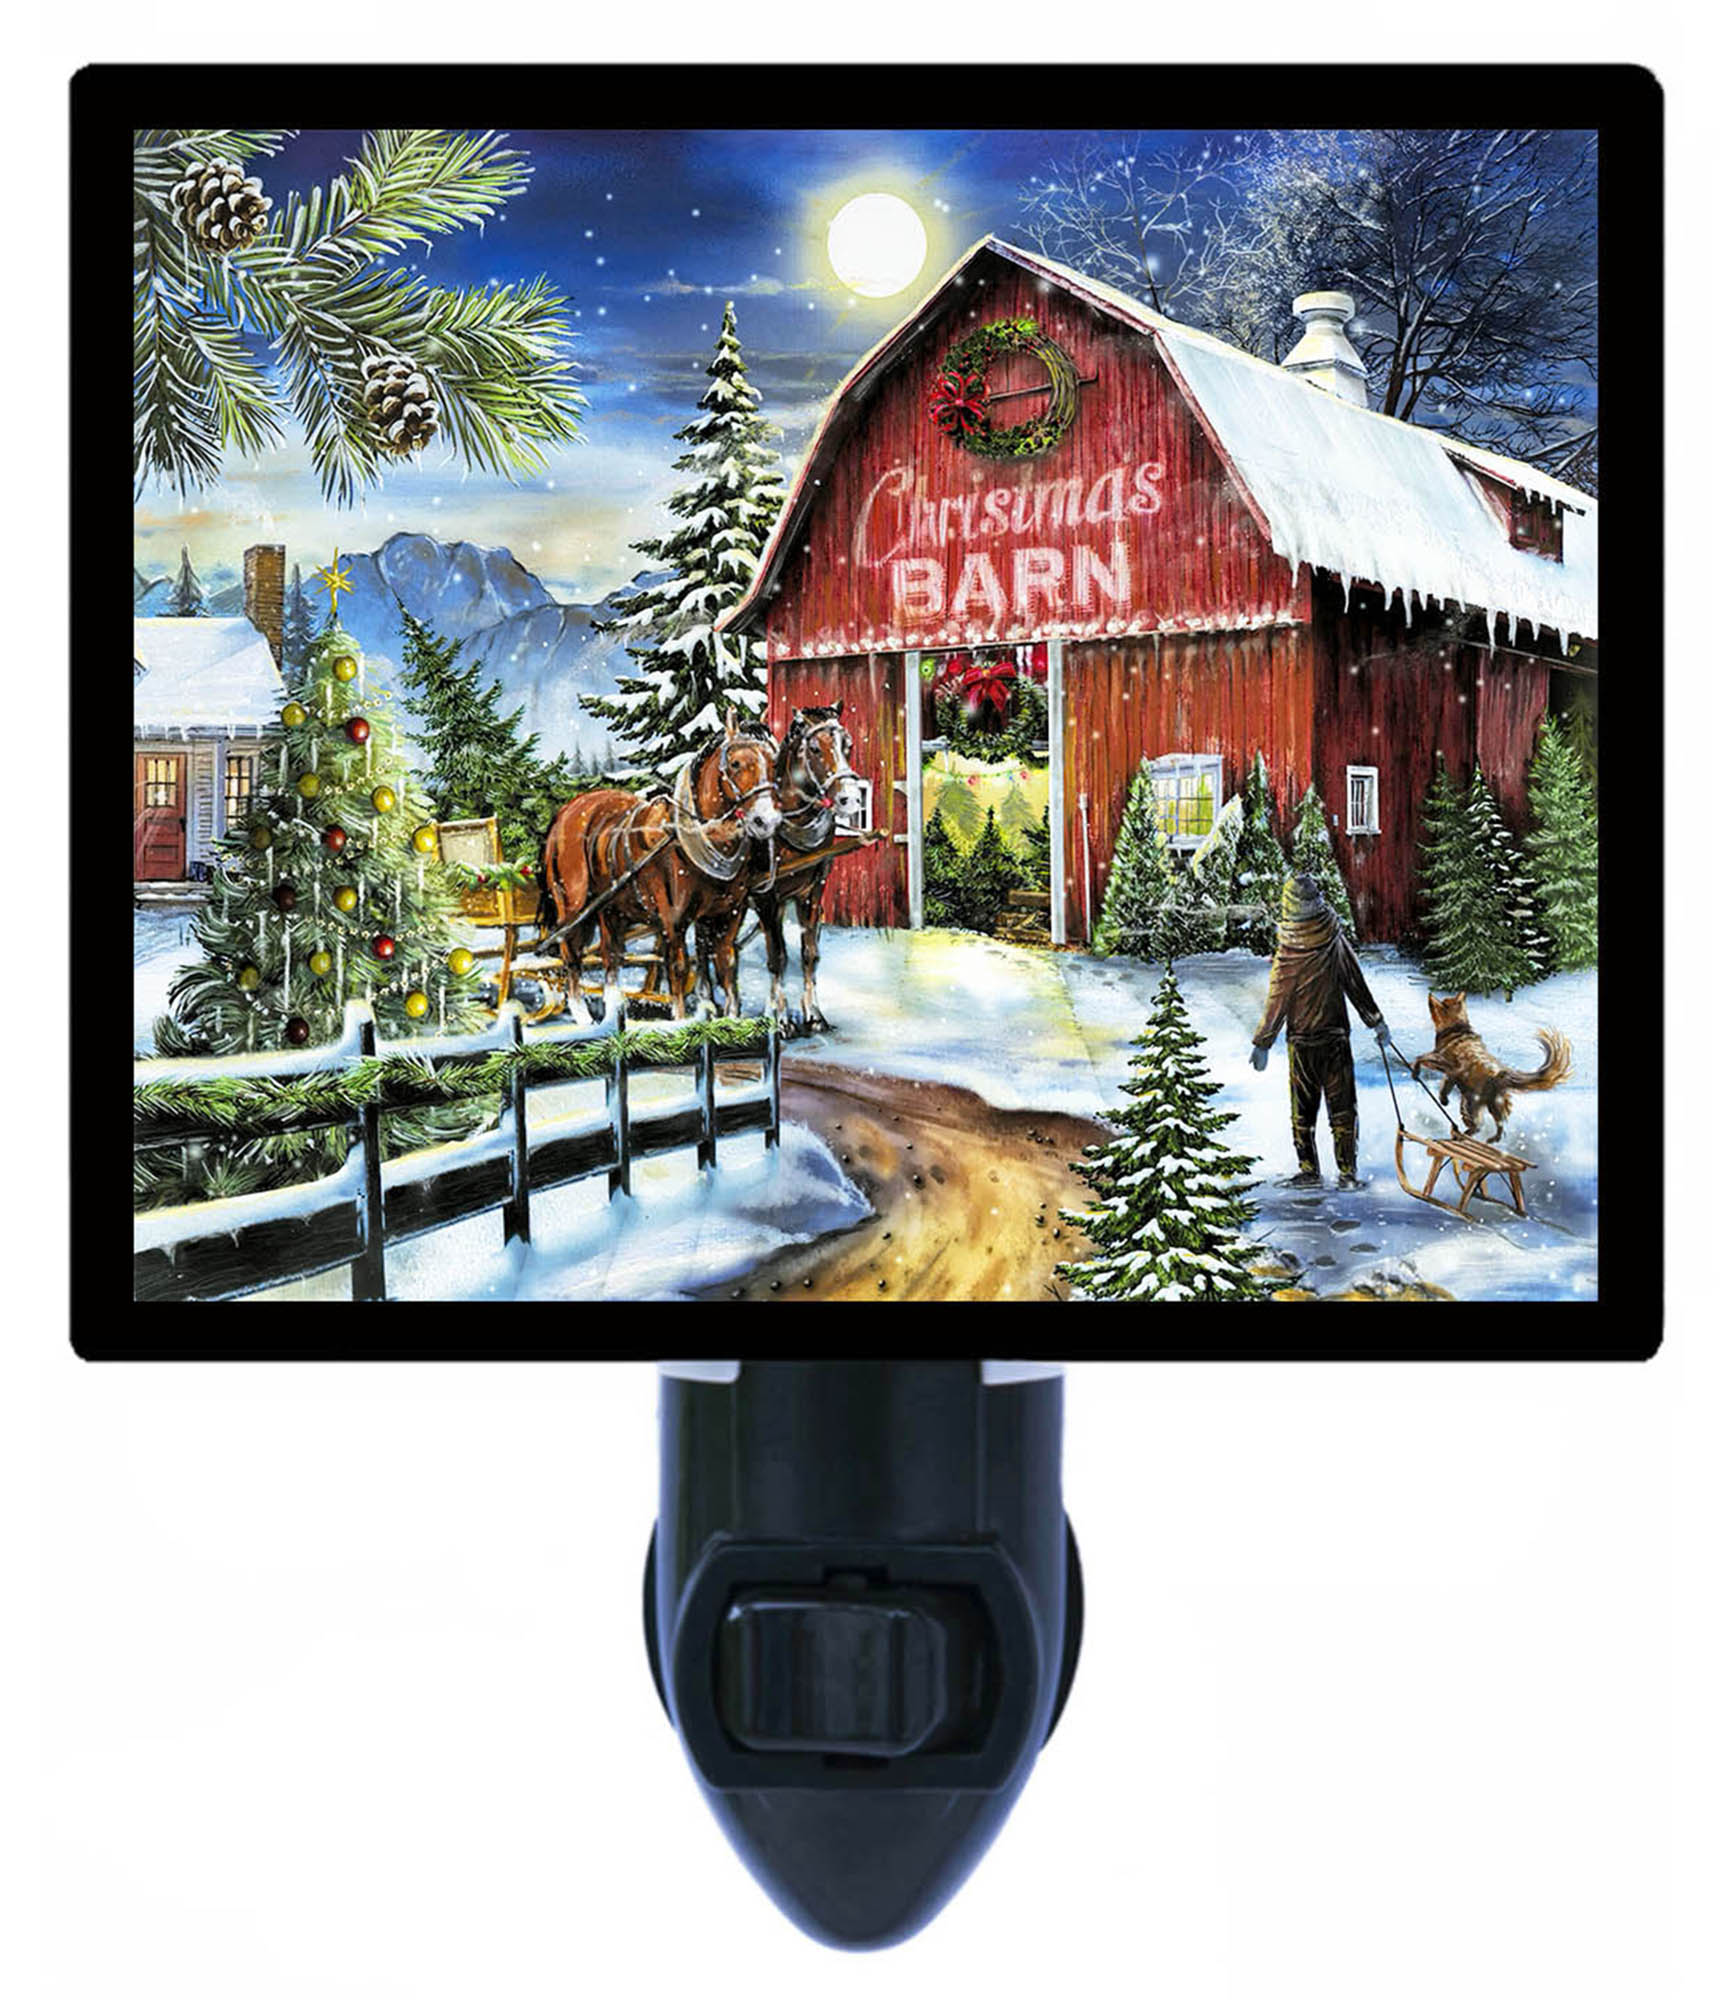 Night Light Designs Christmas Decorative Photo Night Light. The Christmas Barn. Light Comes with Extra 4 Watt Bulb.